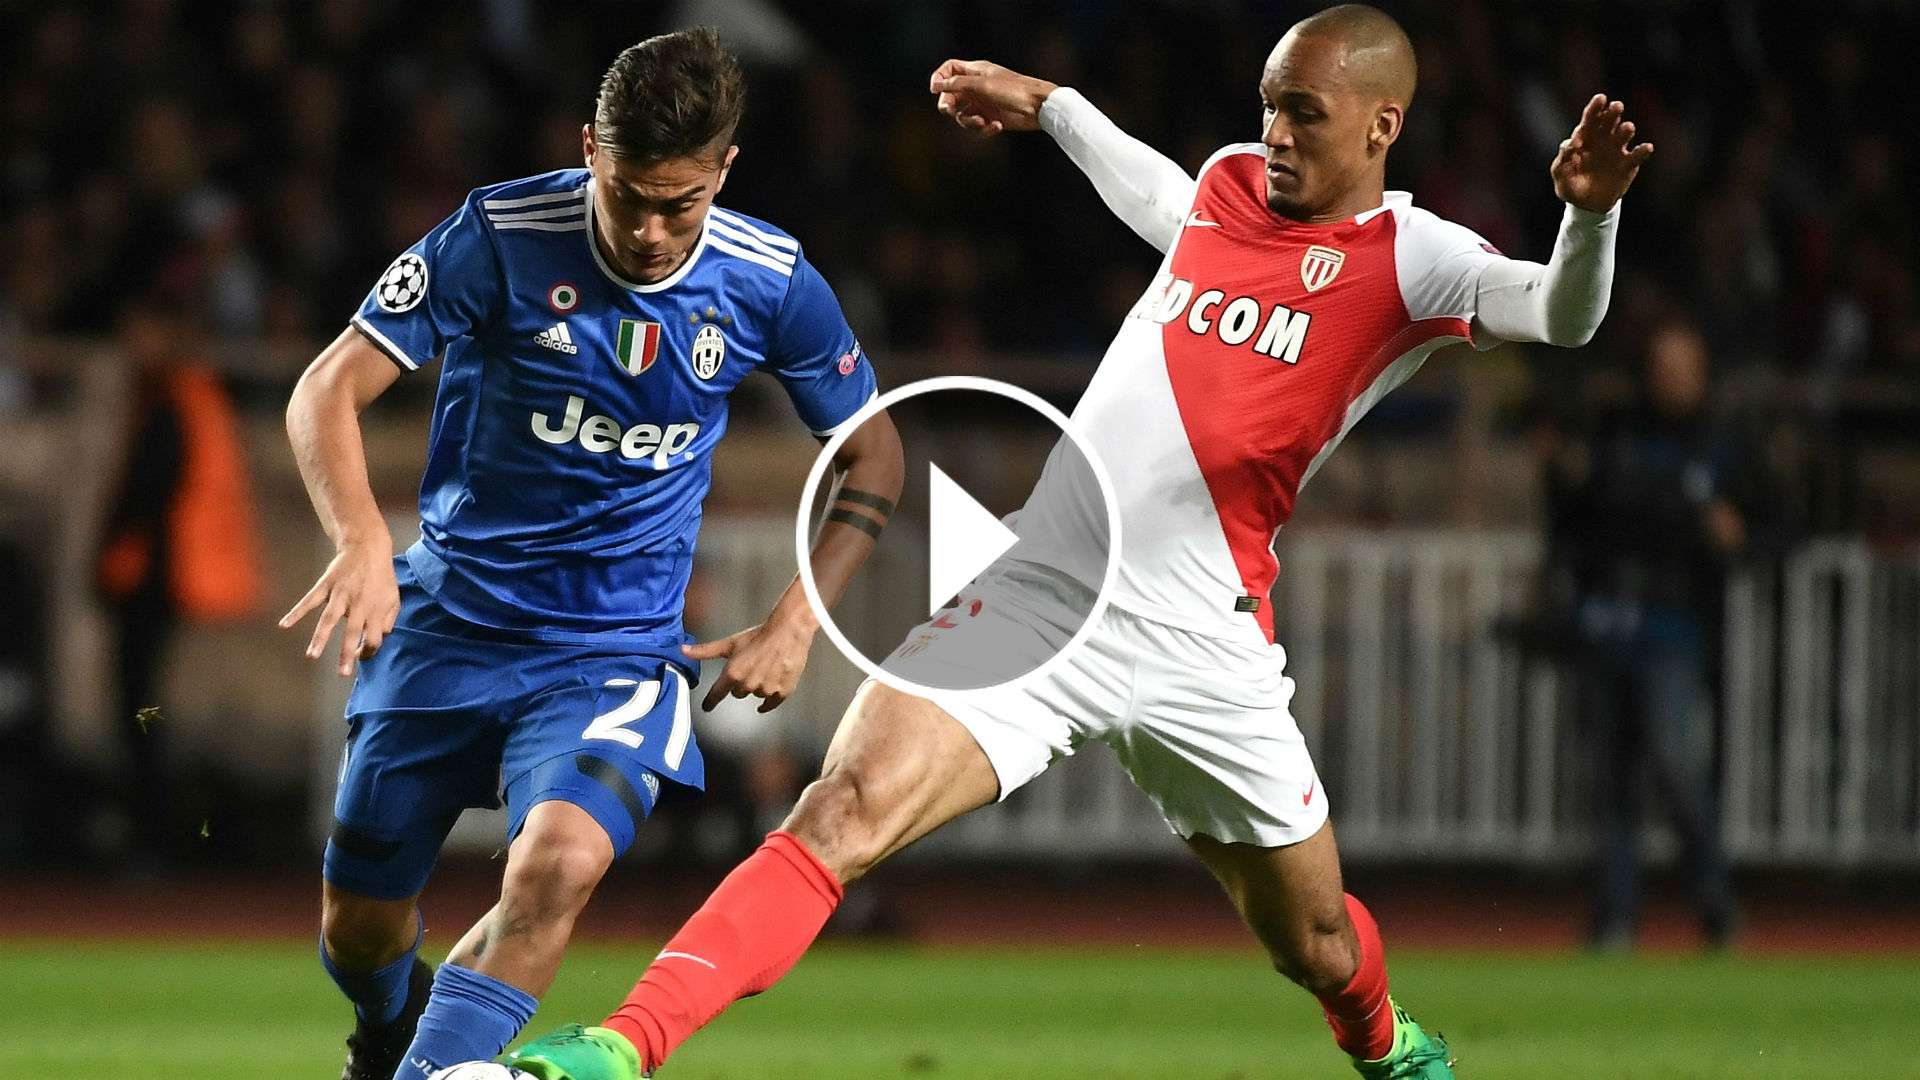 VIDEO PLAY Dybala Fabinho Monaco Juventus Champions League 03052017